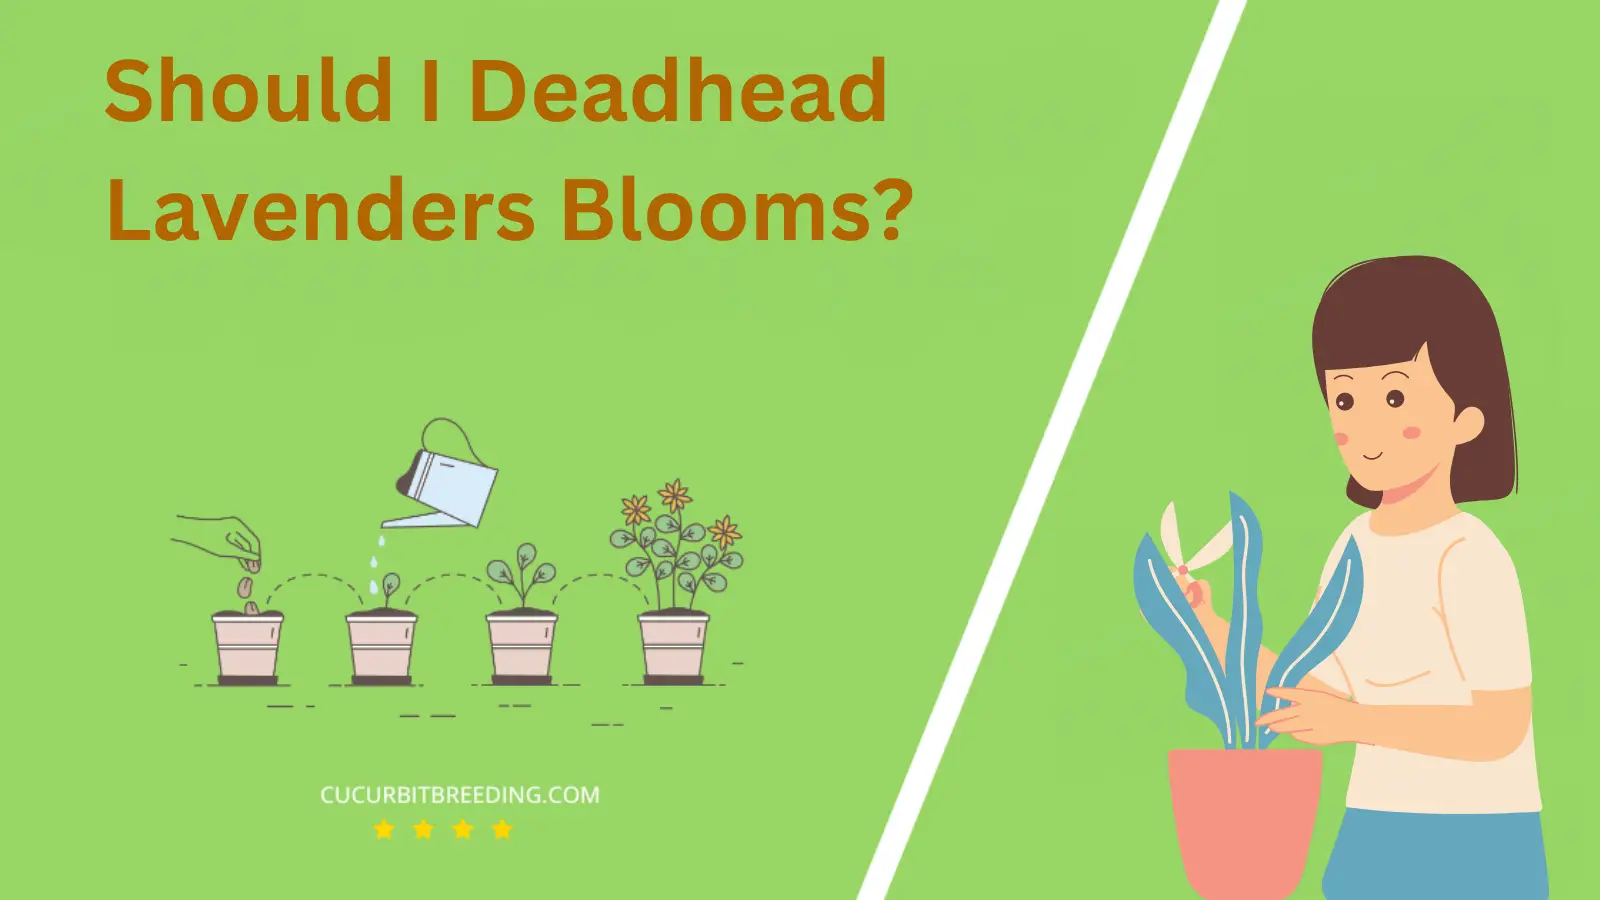 Should I Deadhead Lavenders Blooms?